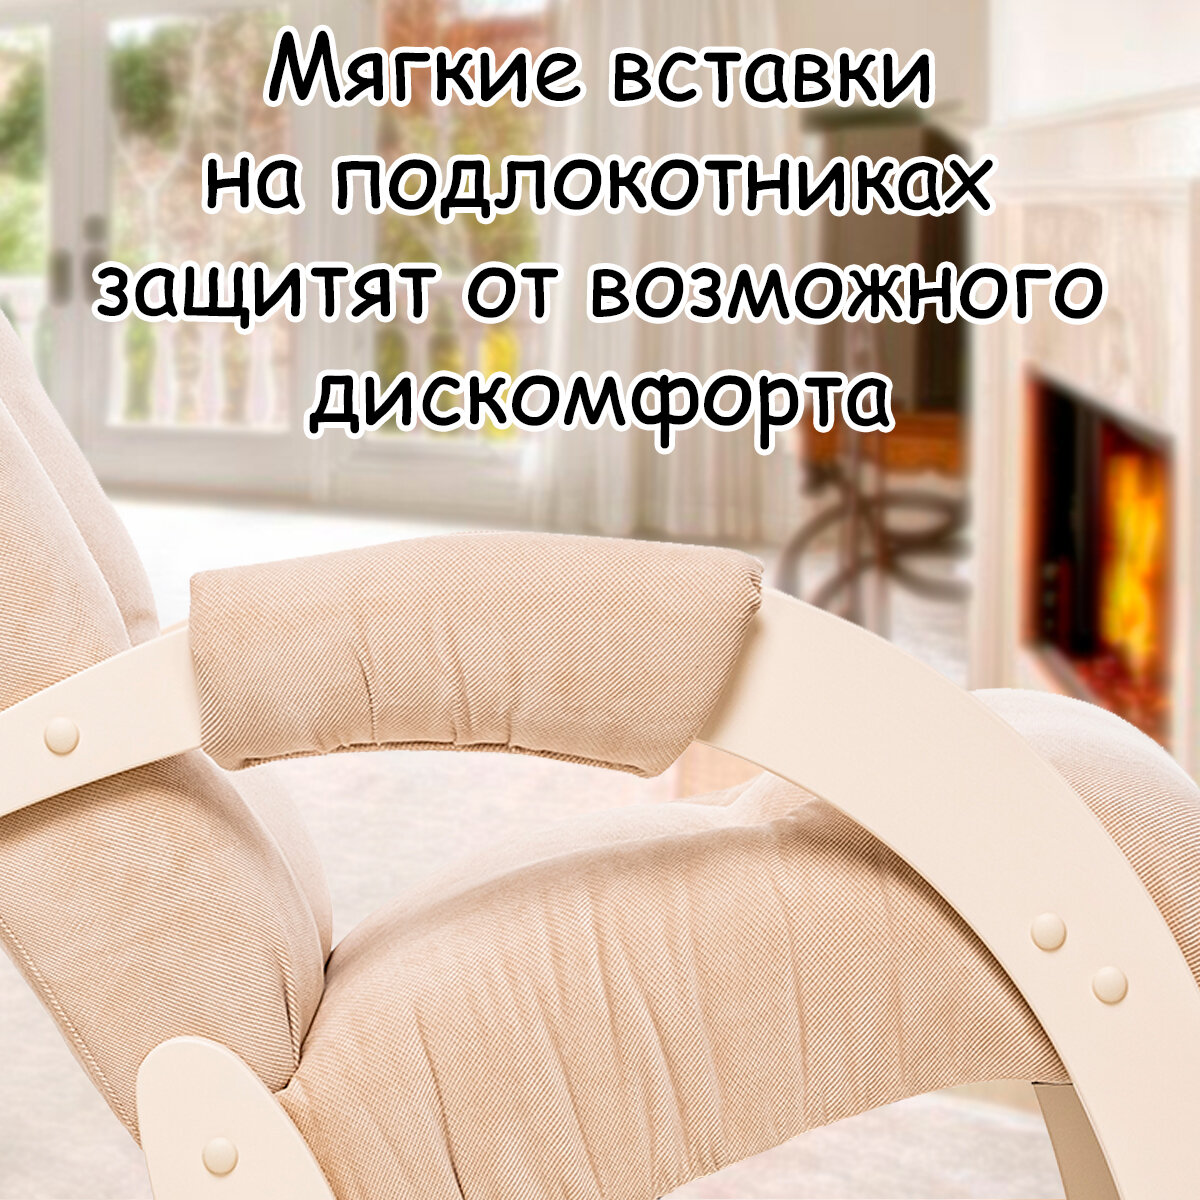 Кресло-качалка для взрослых 54х95х100 см, модель 67, verona, цвет: Vanilla (бежевый), каркас: Dub shampan (бежевый) - фотография № 5